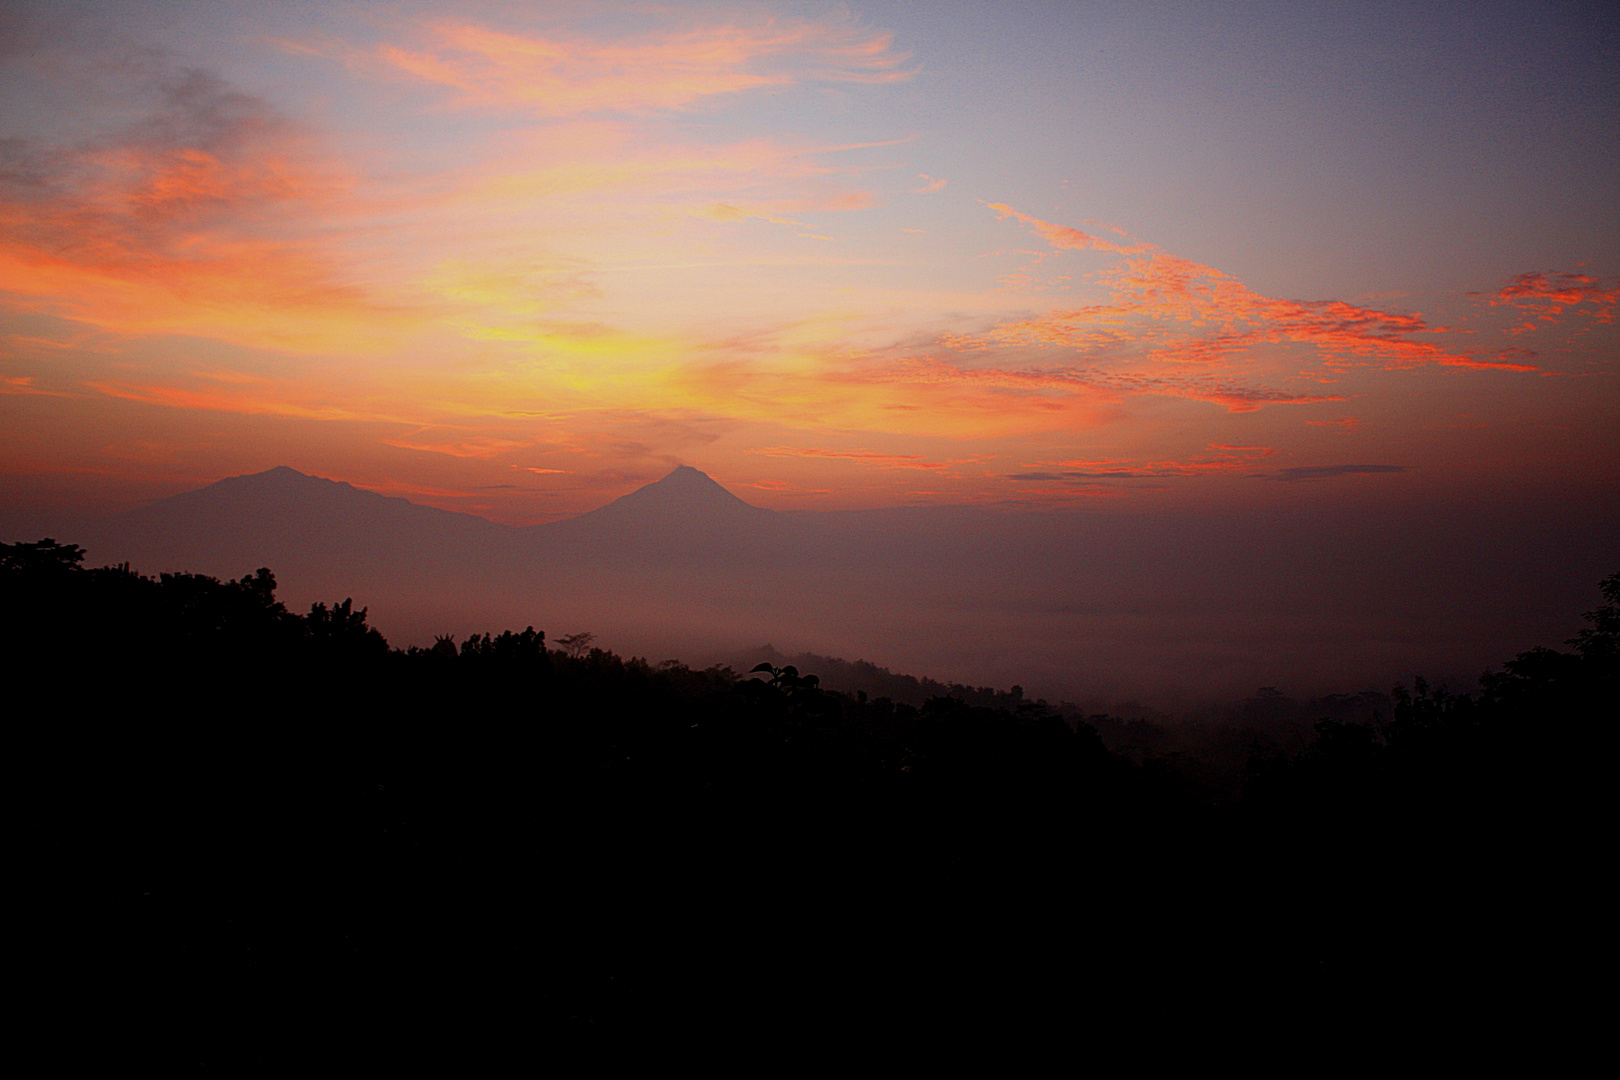 Sunrise at Gunung Merapi